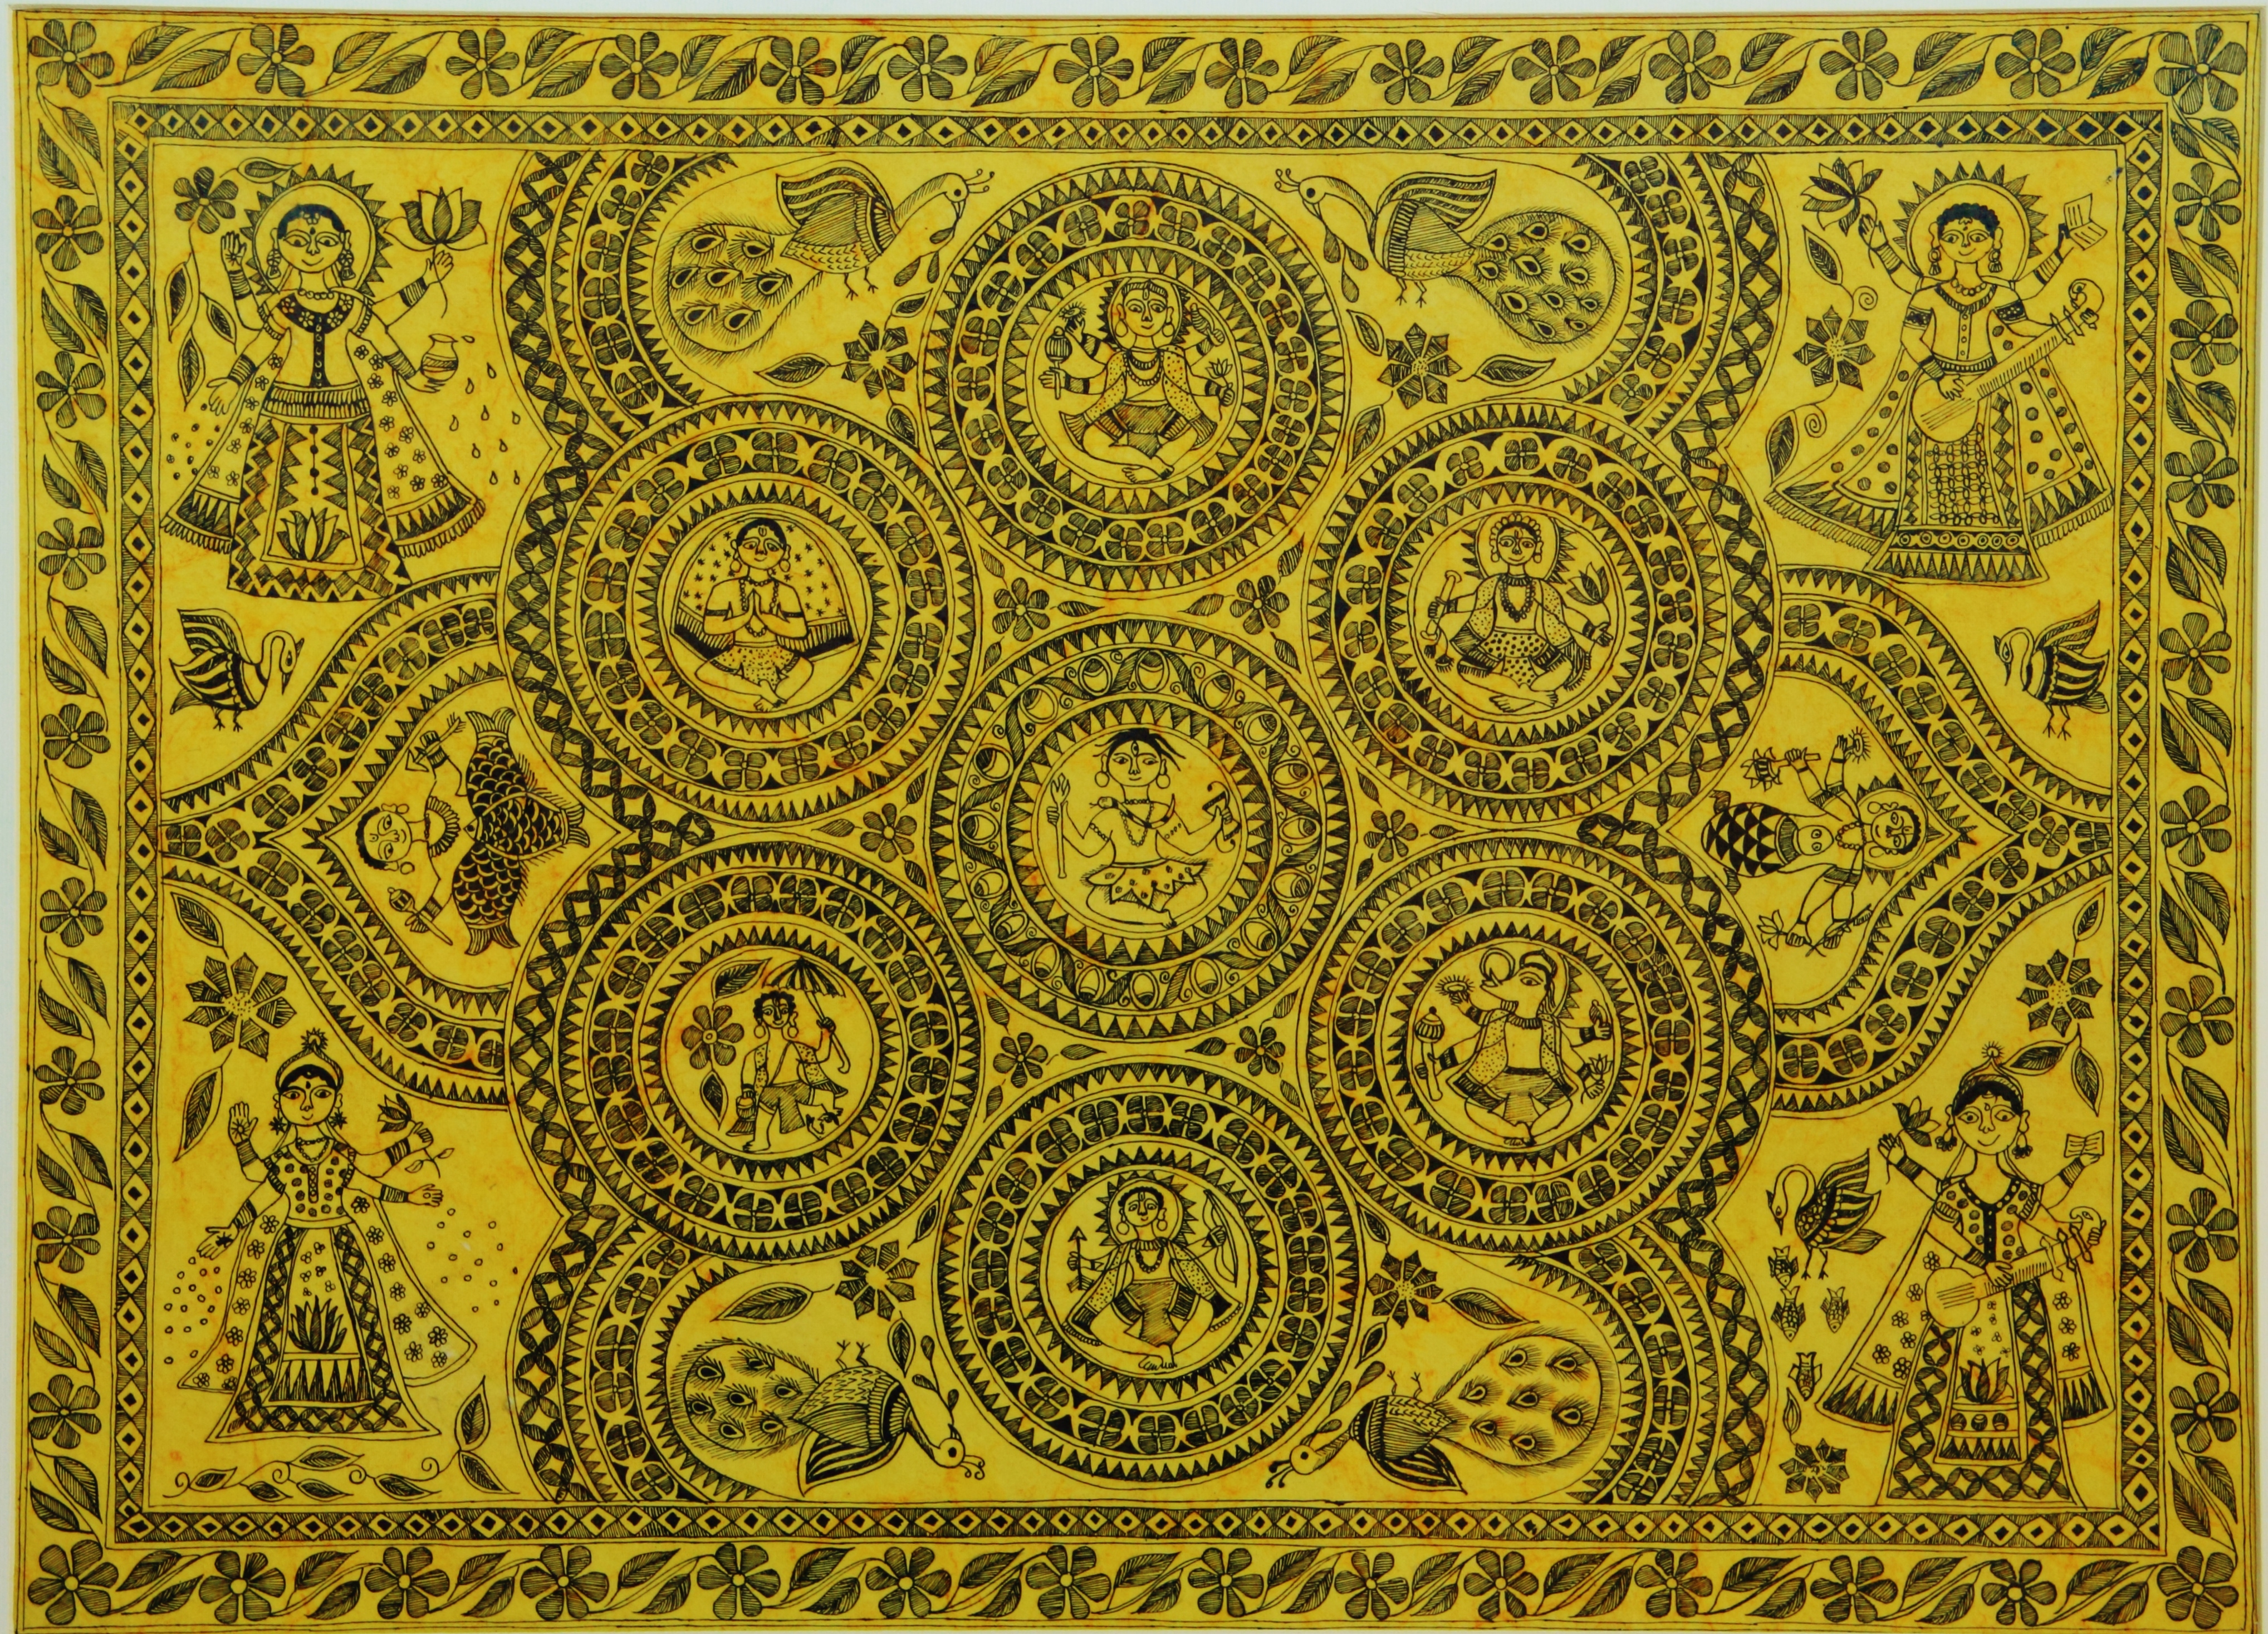 A traditional madhubani painting depicting ten incarnations of God Vishnu